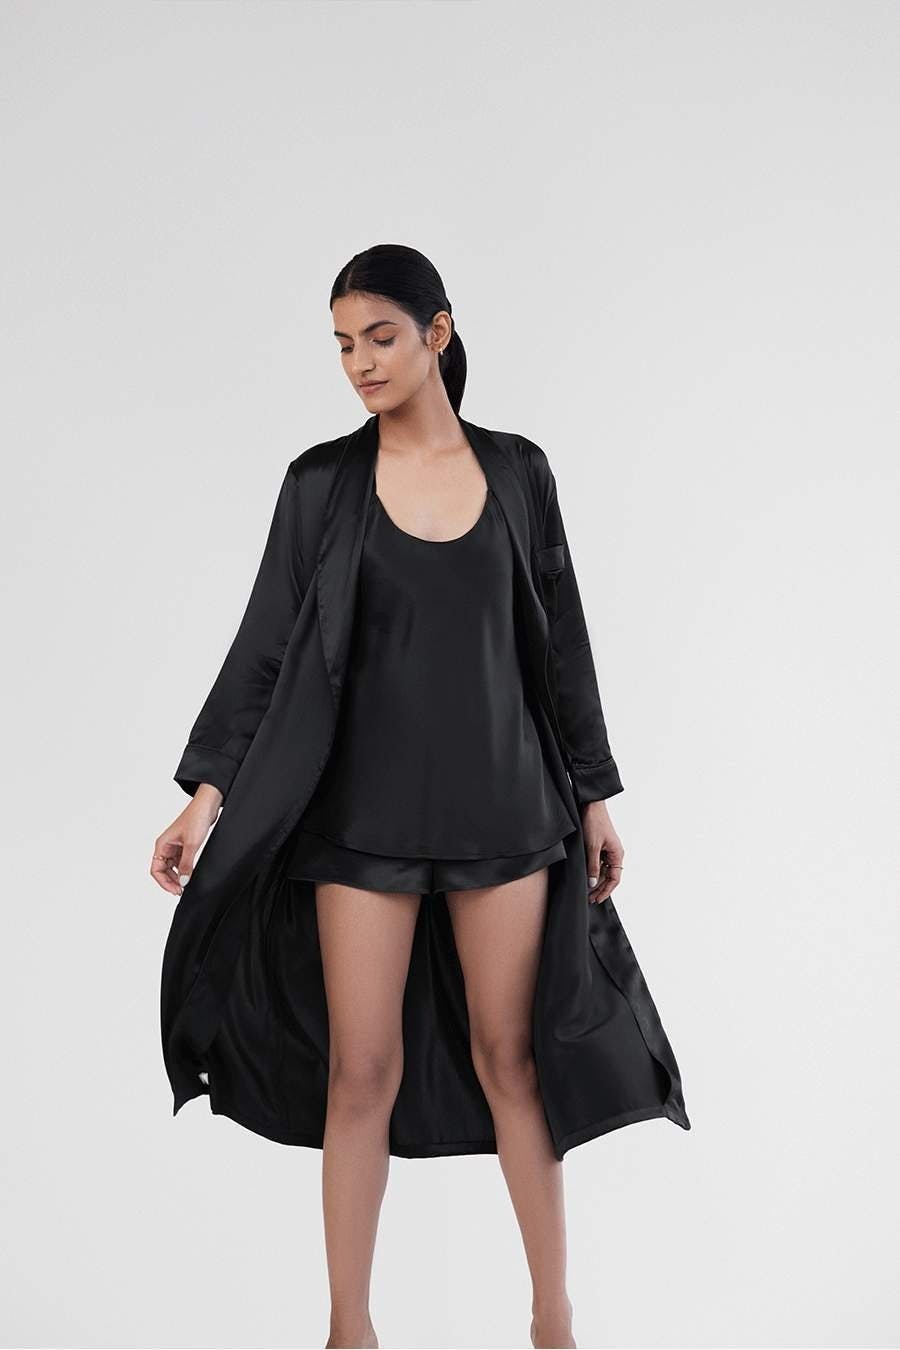 Midnight Black Silk Robe, a product by Sleeplove